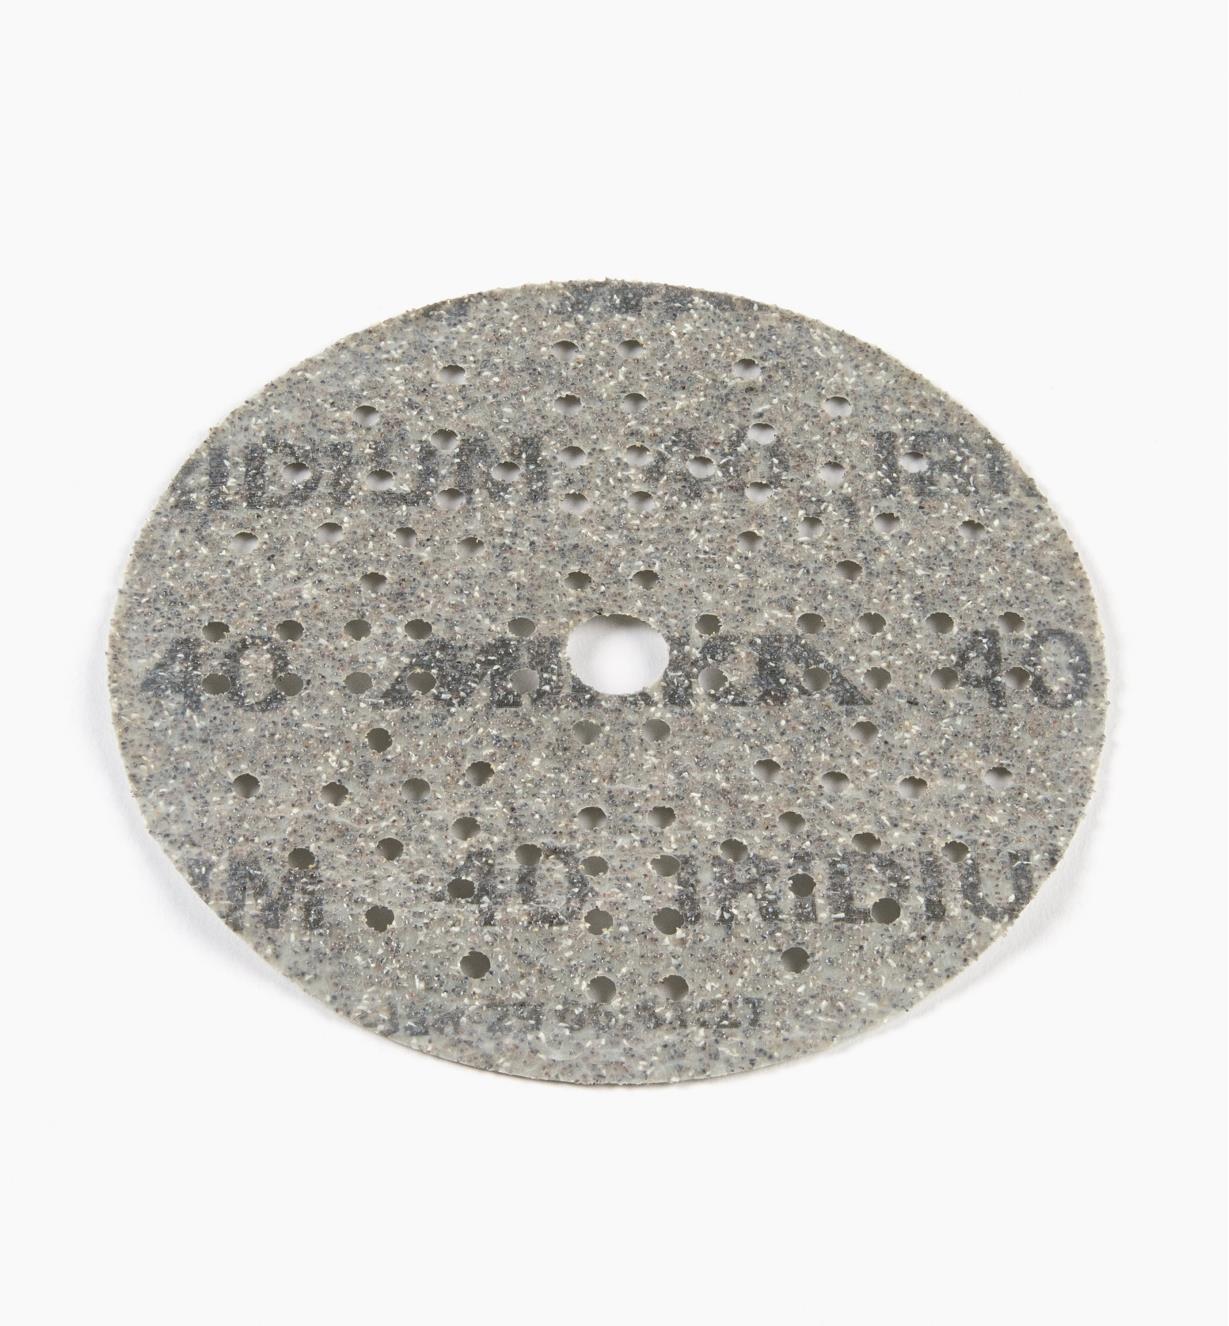 08K0921 - 40x 5" 89-Hole Iridium Grip Disc, ea.